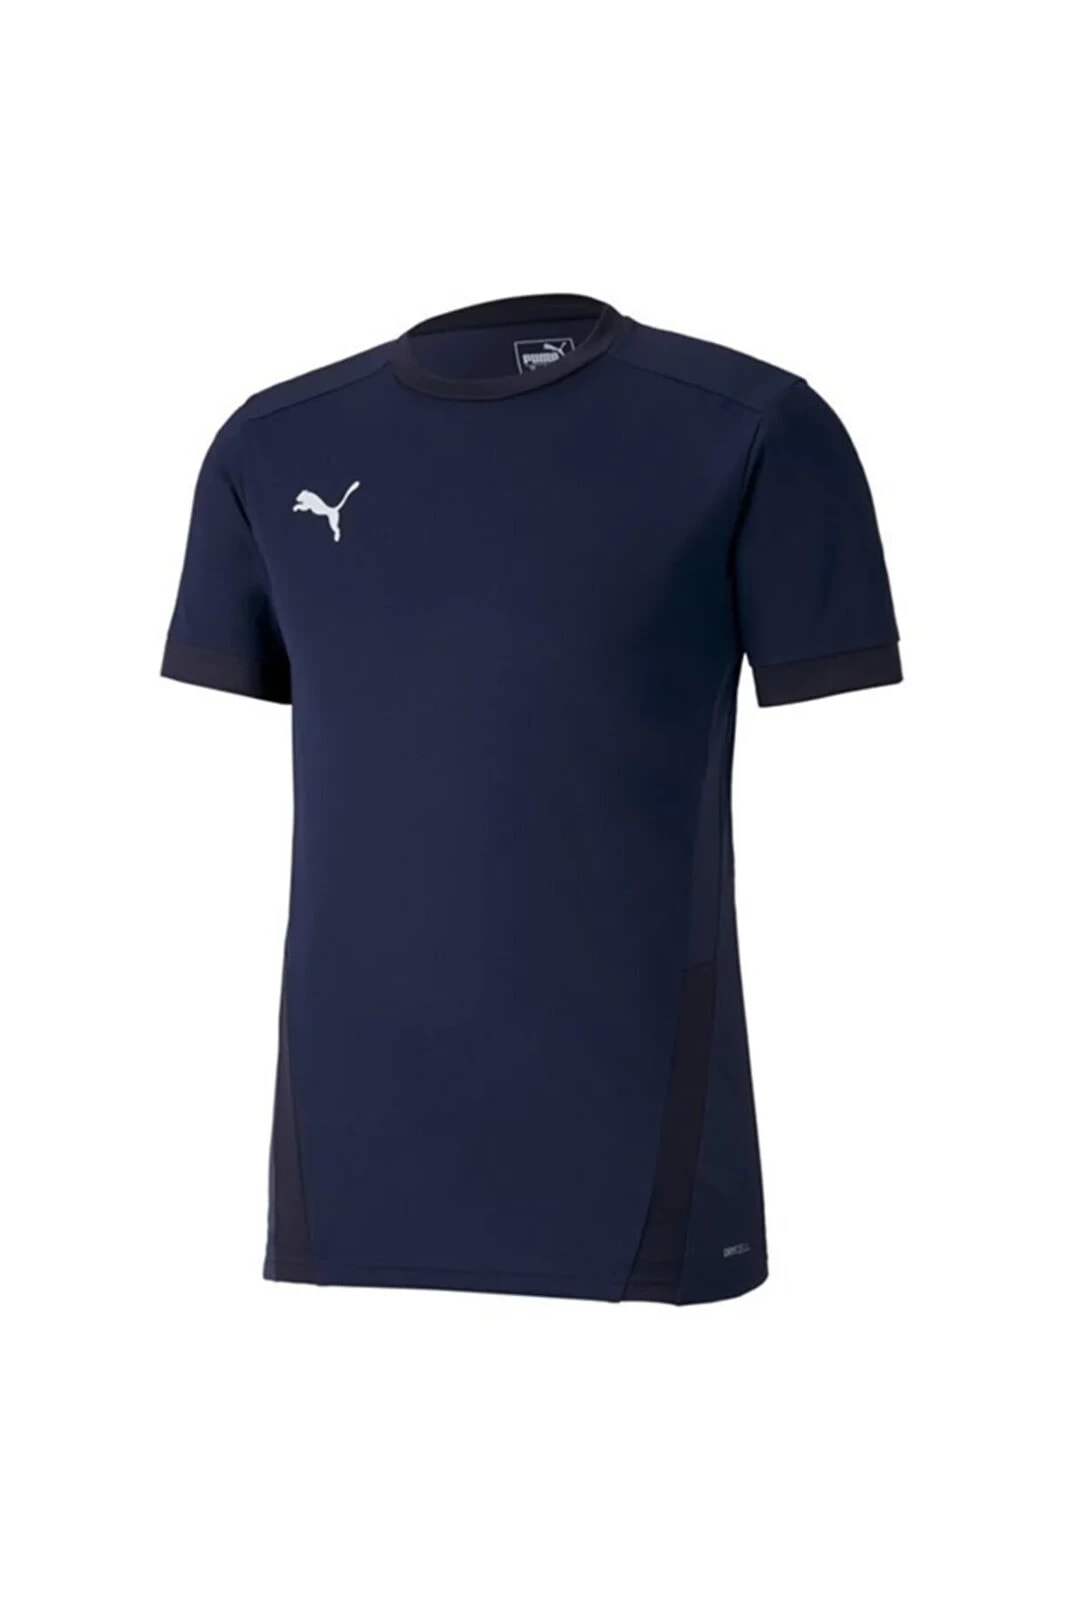 Men Team Goal 23 T-shirts Training Navy Soccer Tee Top Gym Jersey 70417106